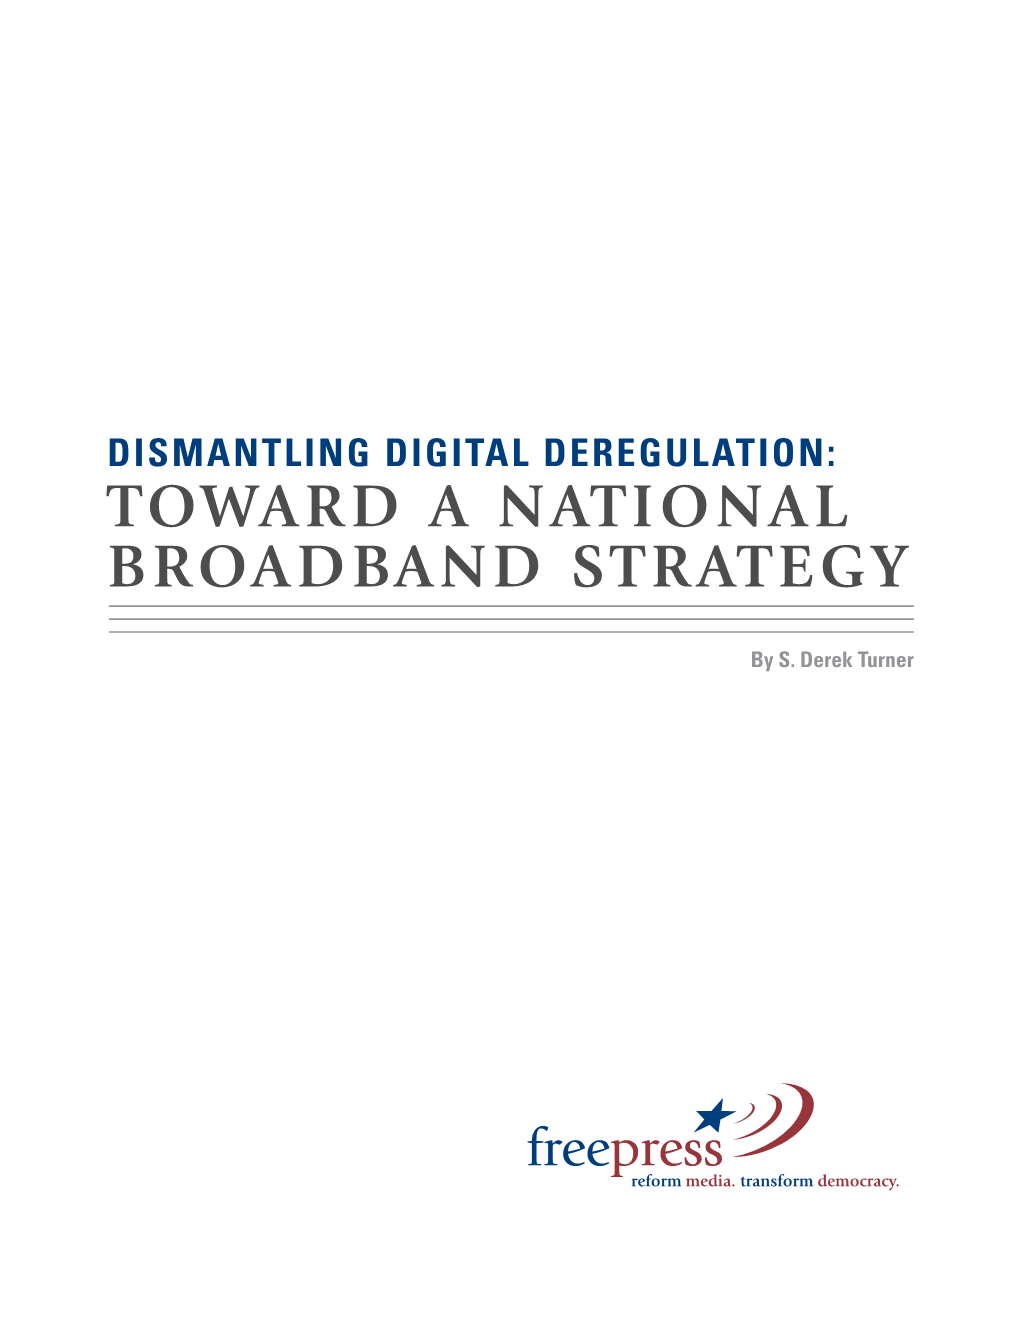 Dismantling Digital Deregulation: Toward a National Broadband Strategy